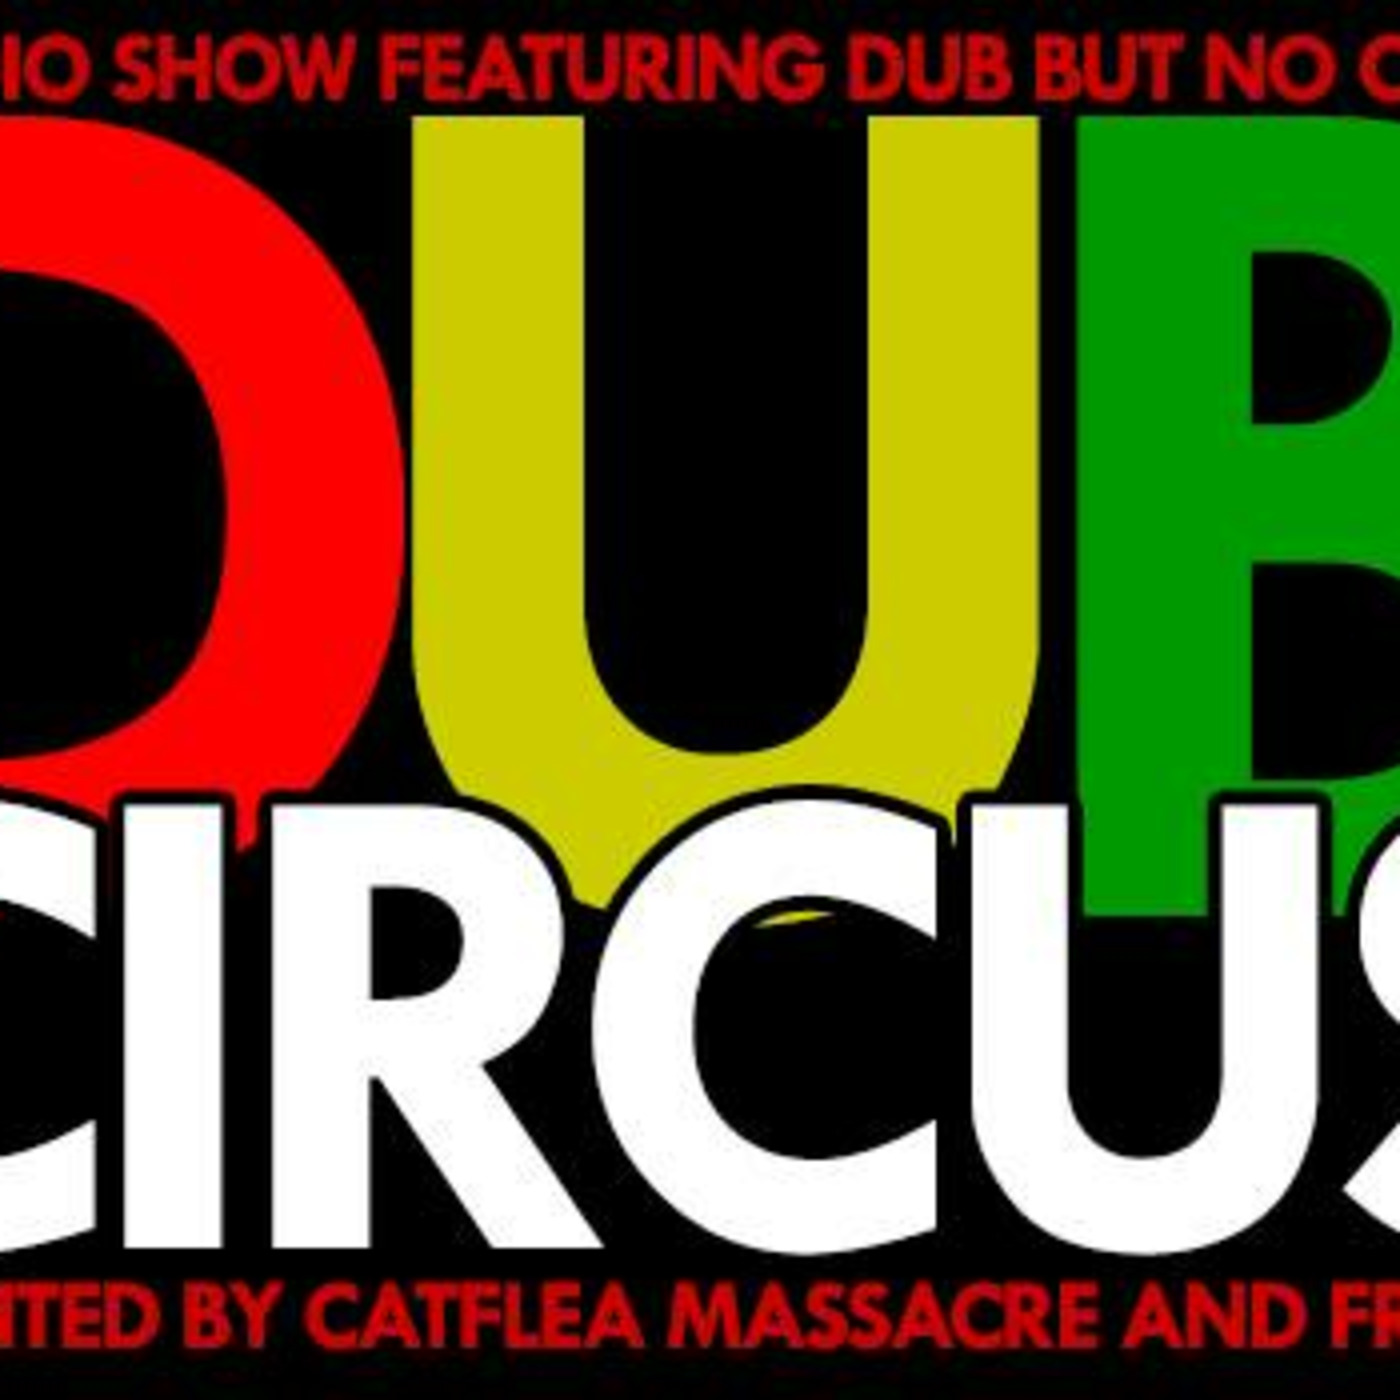 Episode 3544: Dub Circus Show 242 On bootboyradio.net